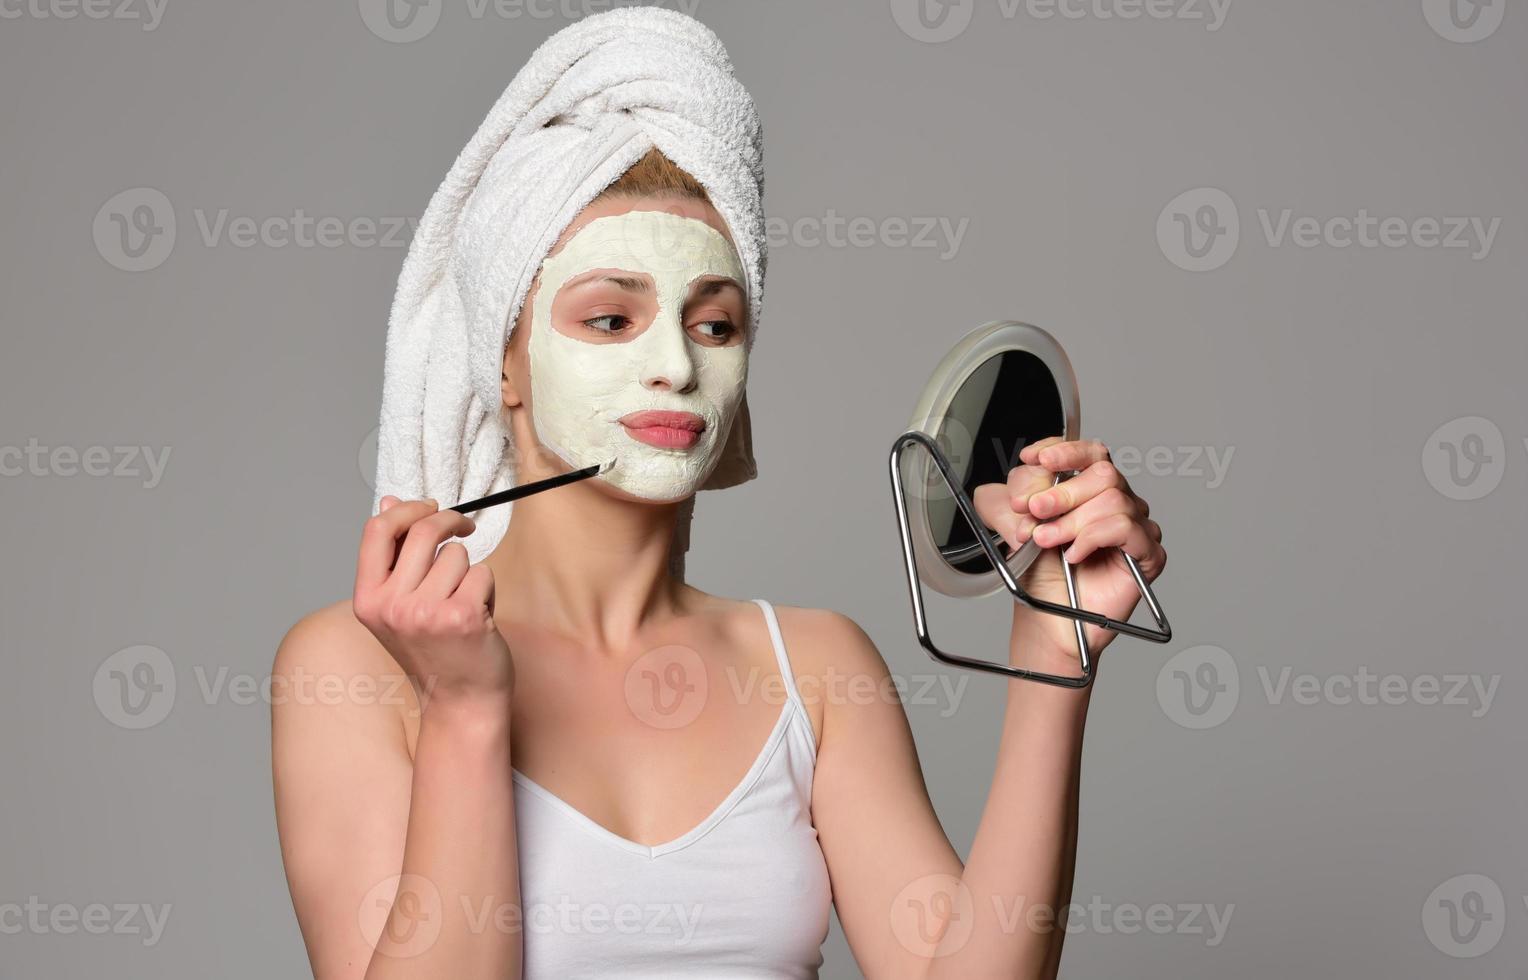 bela modelo feminina com toalha no ouvido e máscara cosmética facial branca no rosto. conceito cosmético de beleza. isolado em fundo cinza. foto